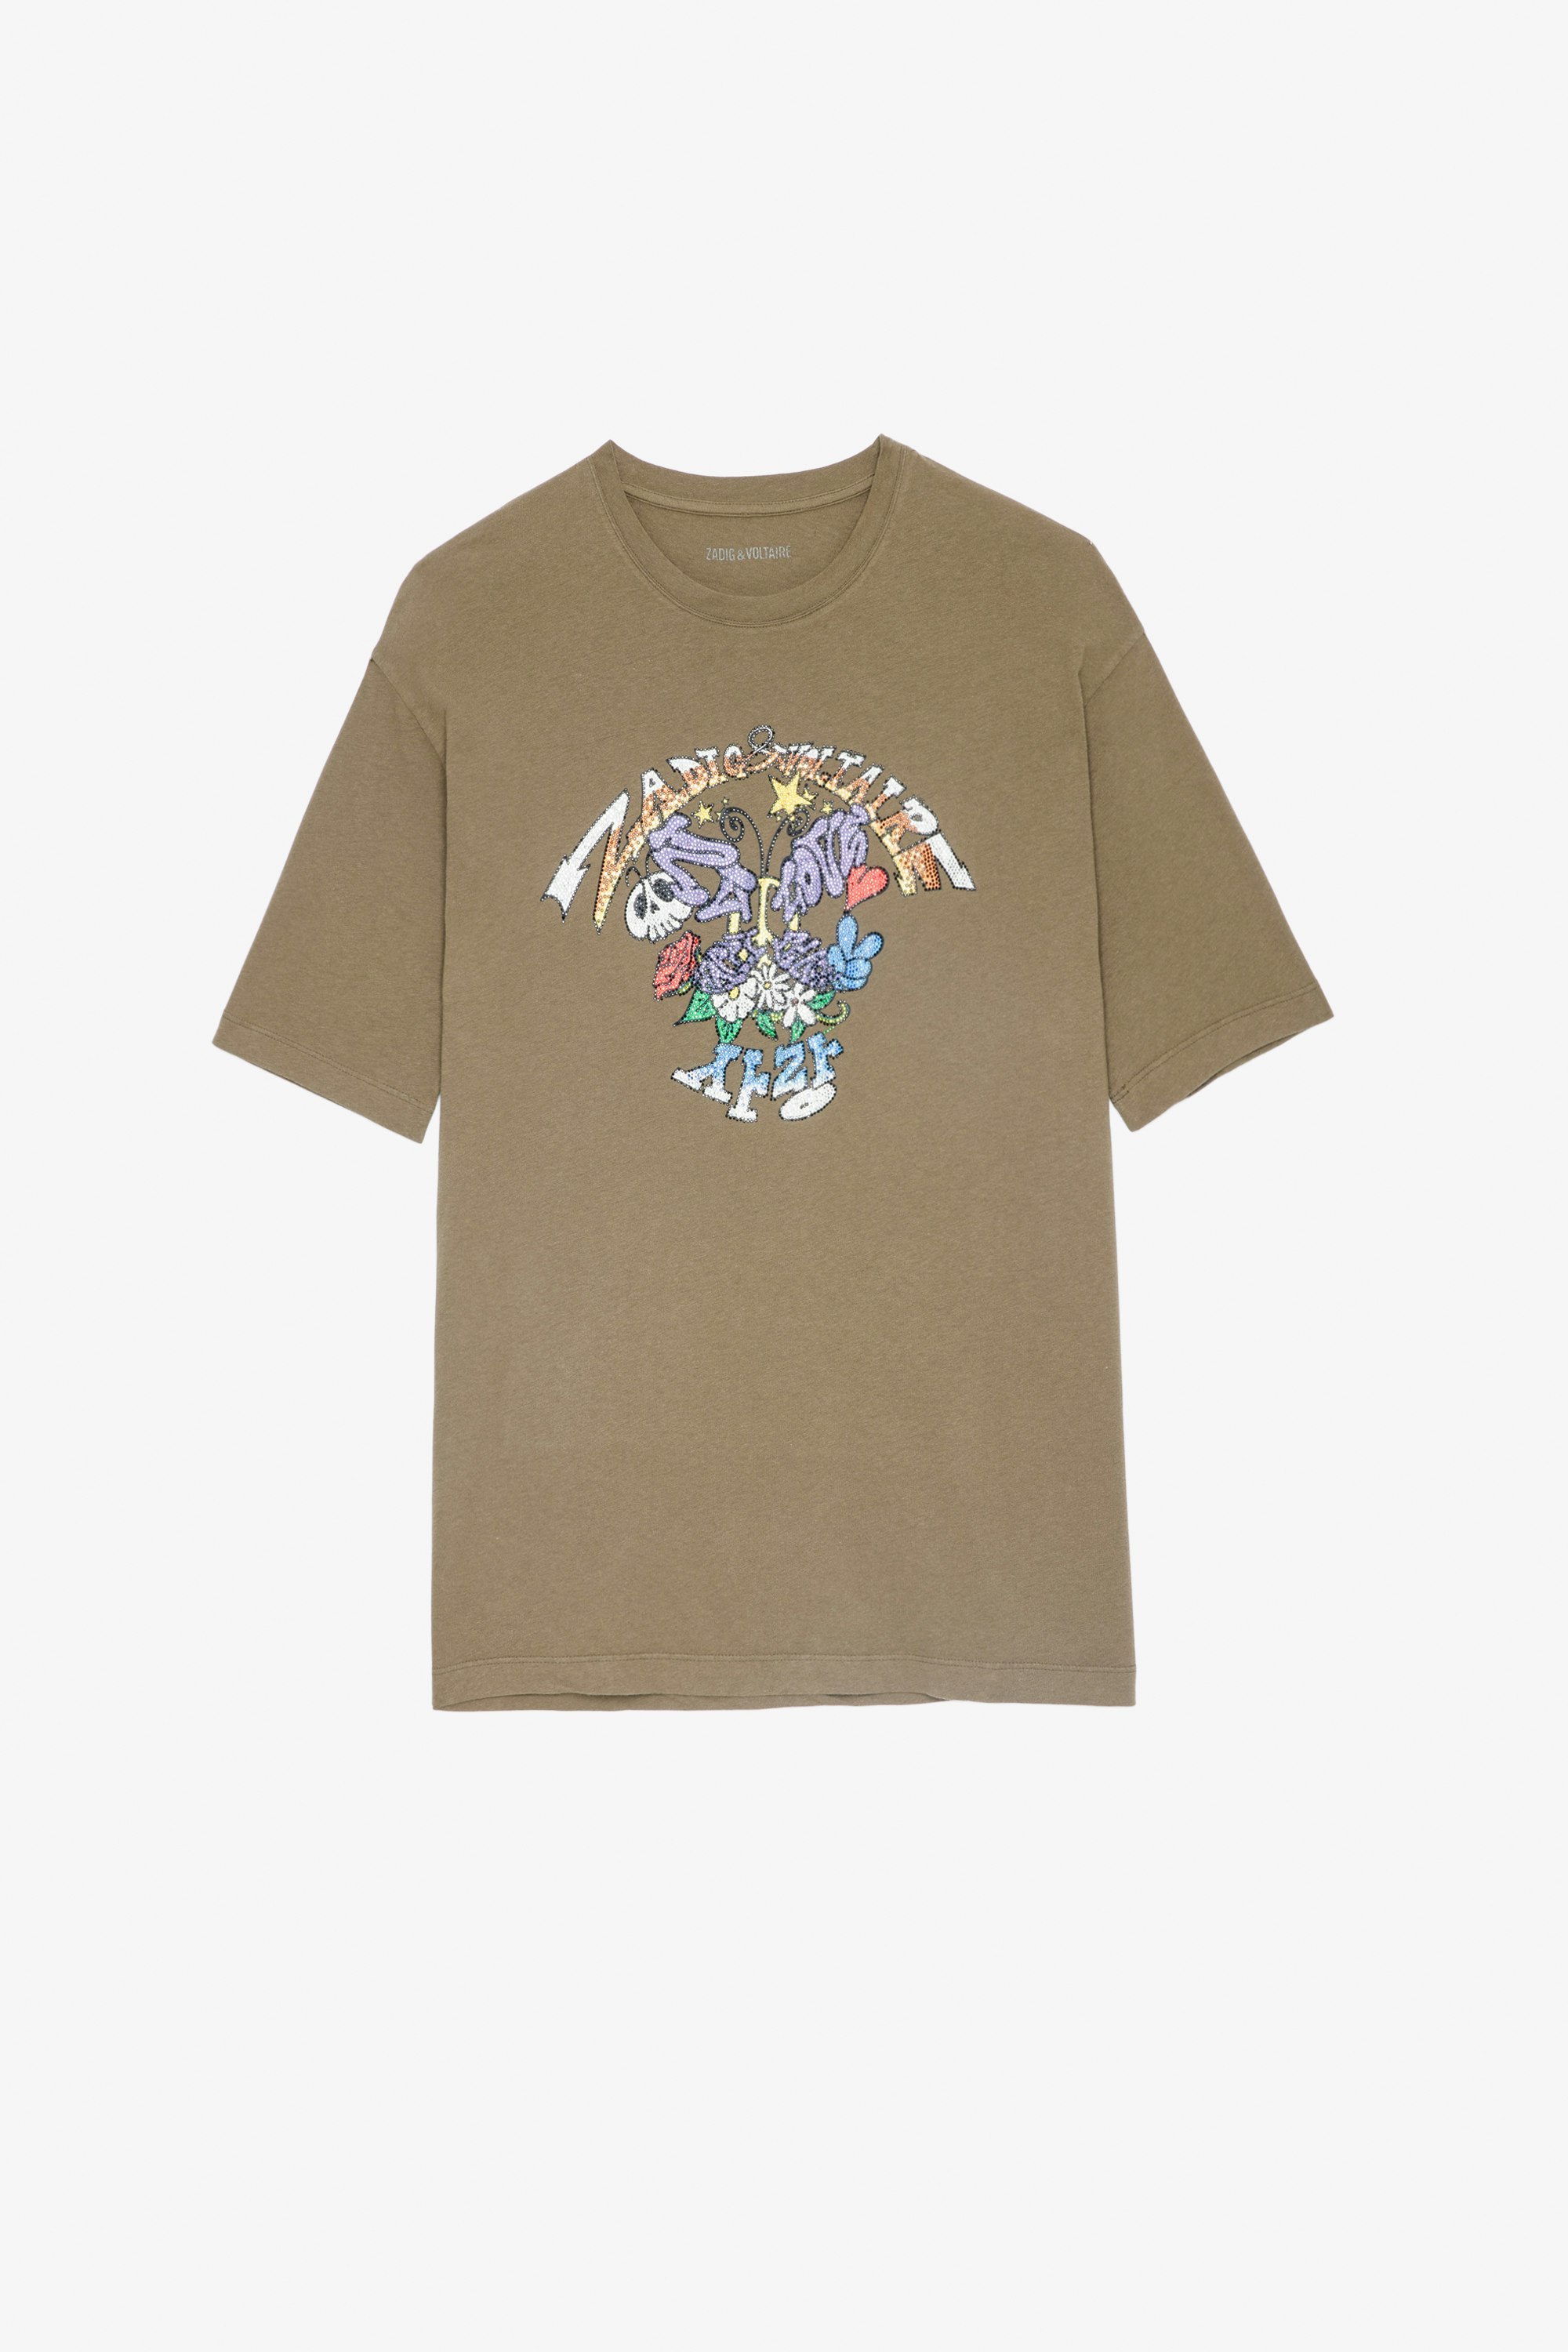 Suzy T-Shirt Women’s khaki cotton T-shirt featuring a crystal-studded Core Cho motif